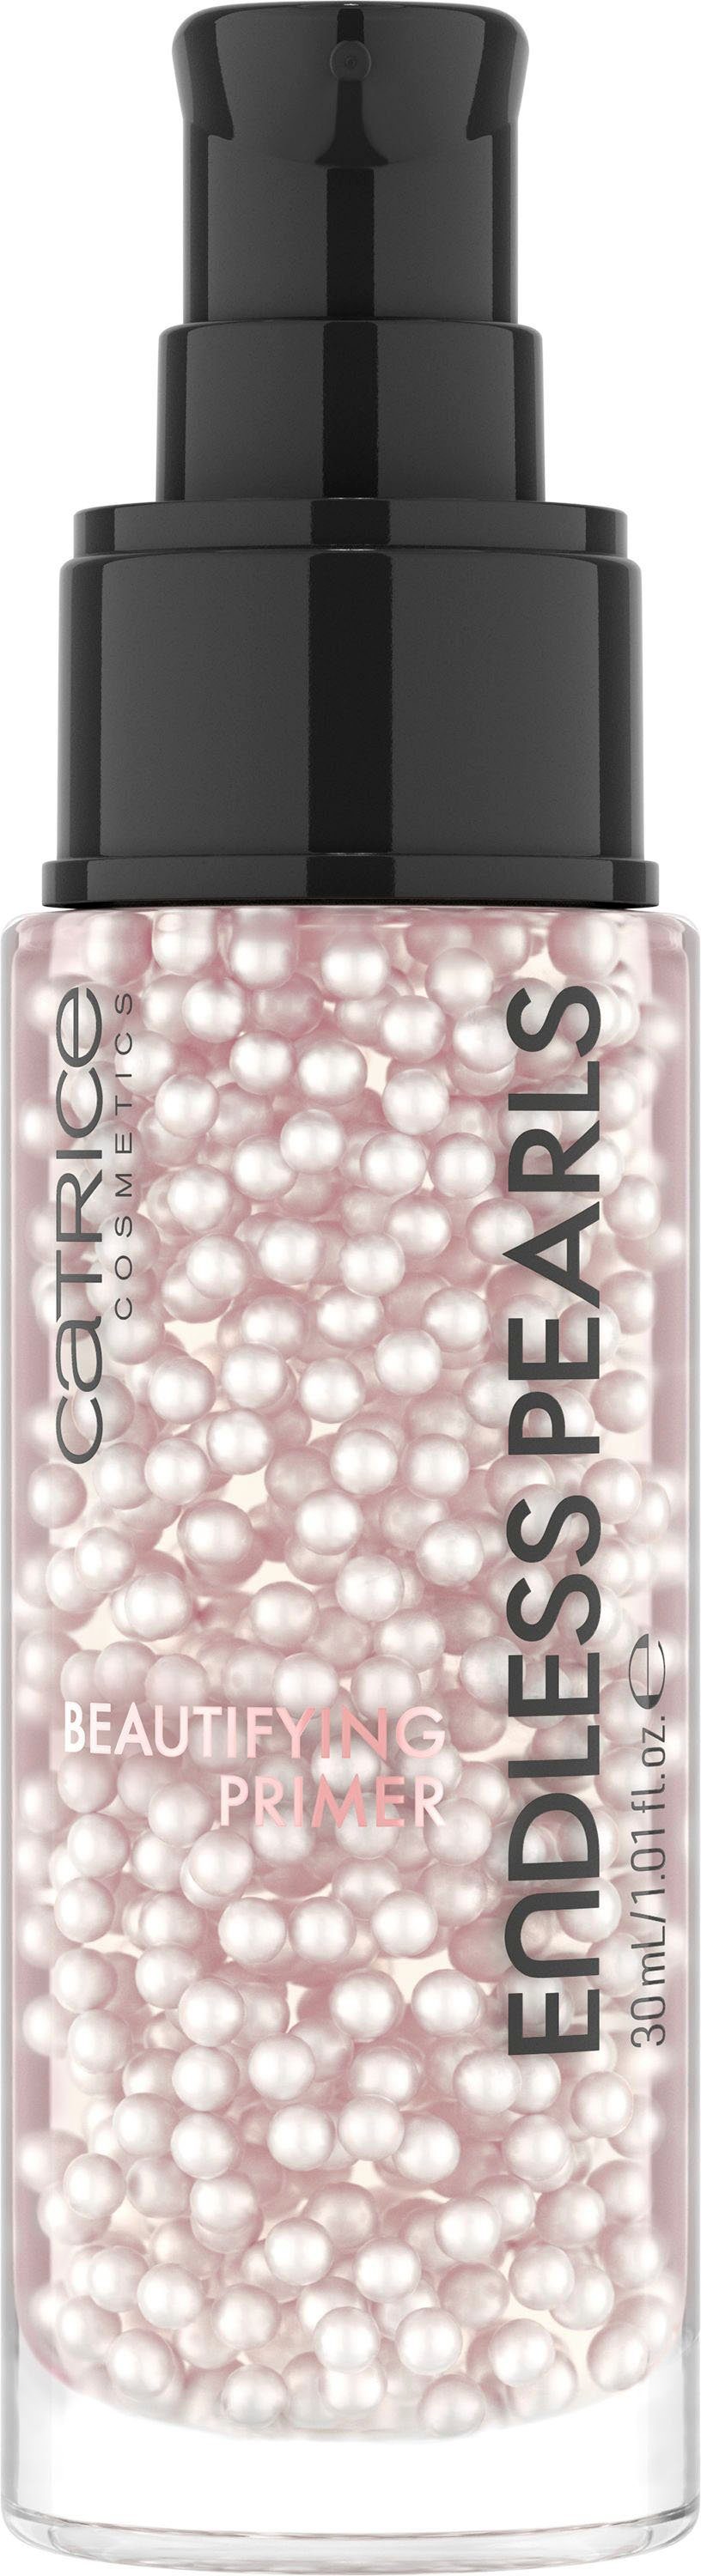 Beautifying Primer Primer Pearls Endless Catrice